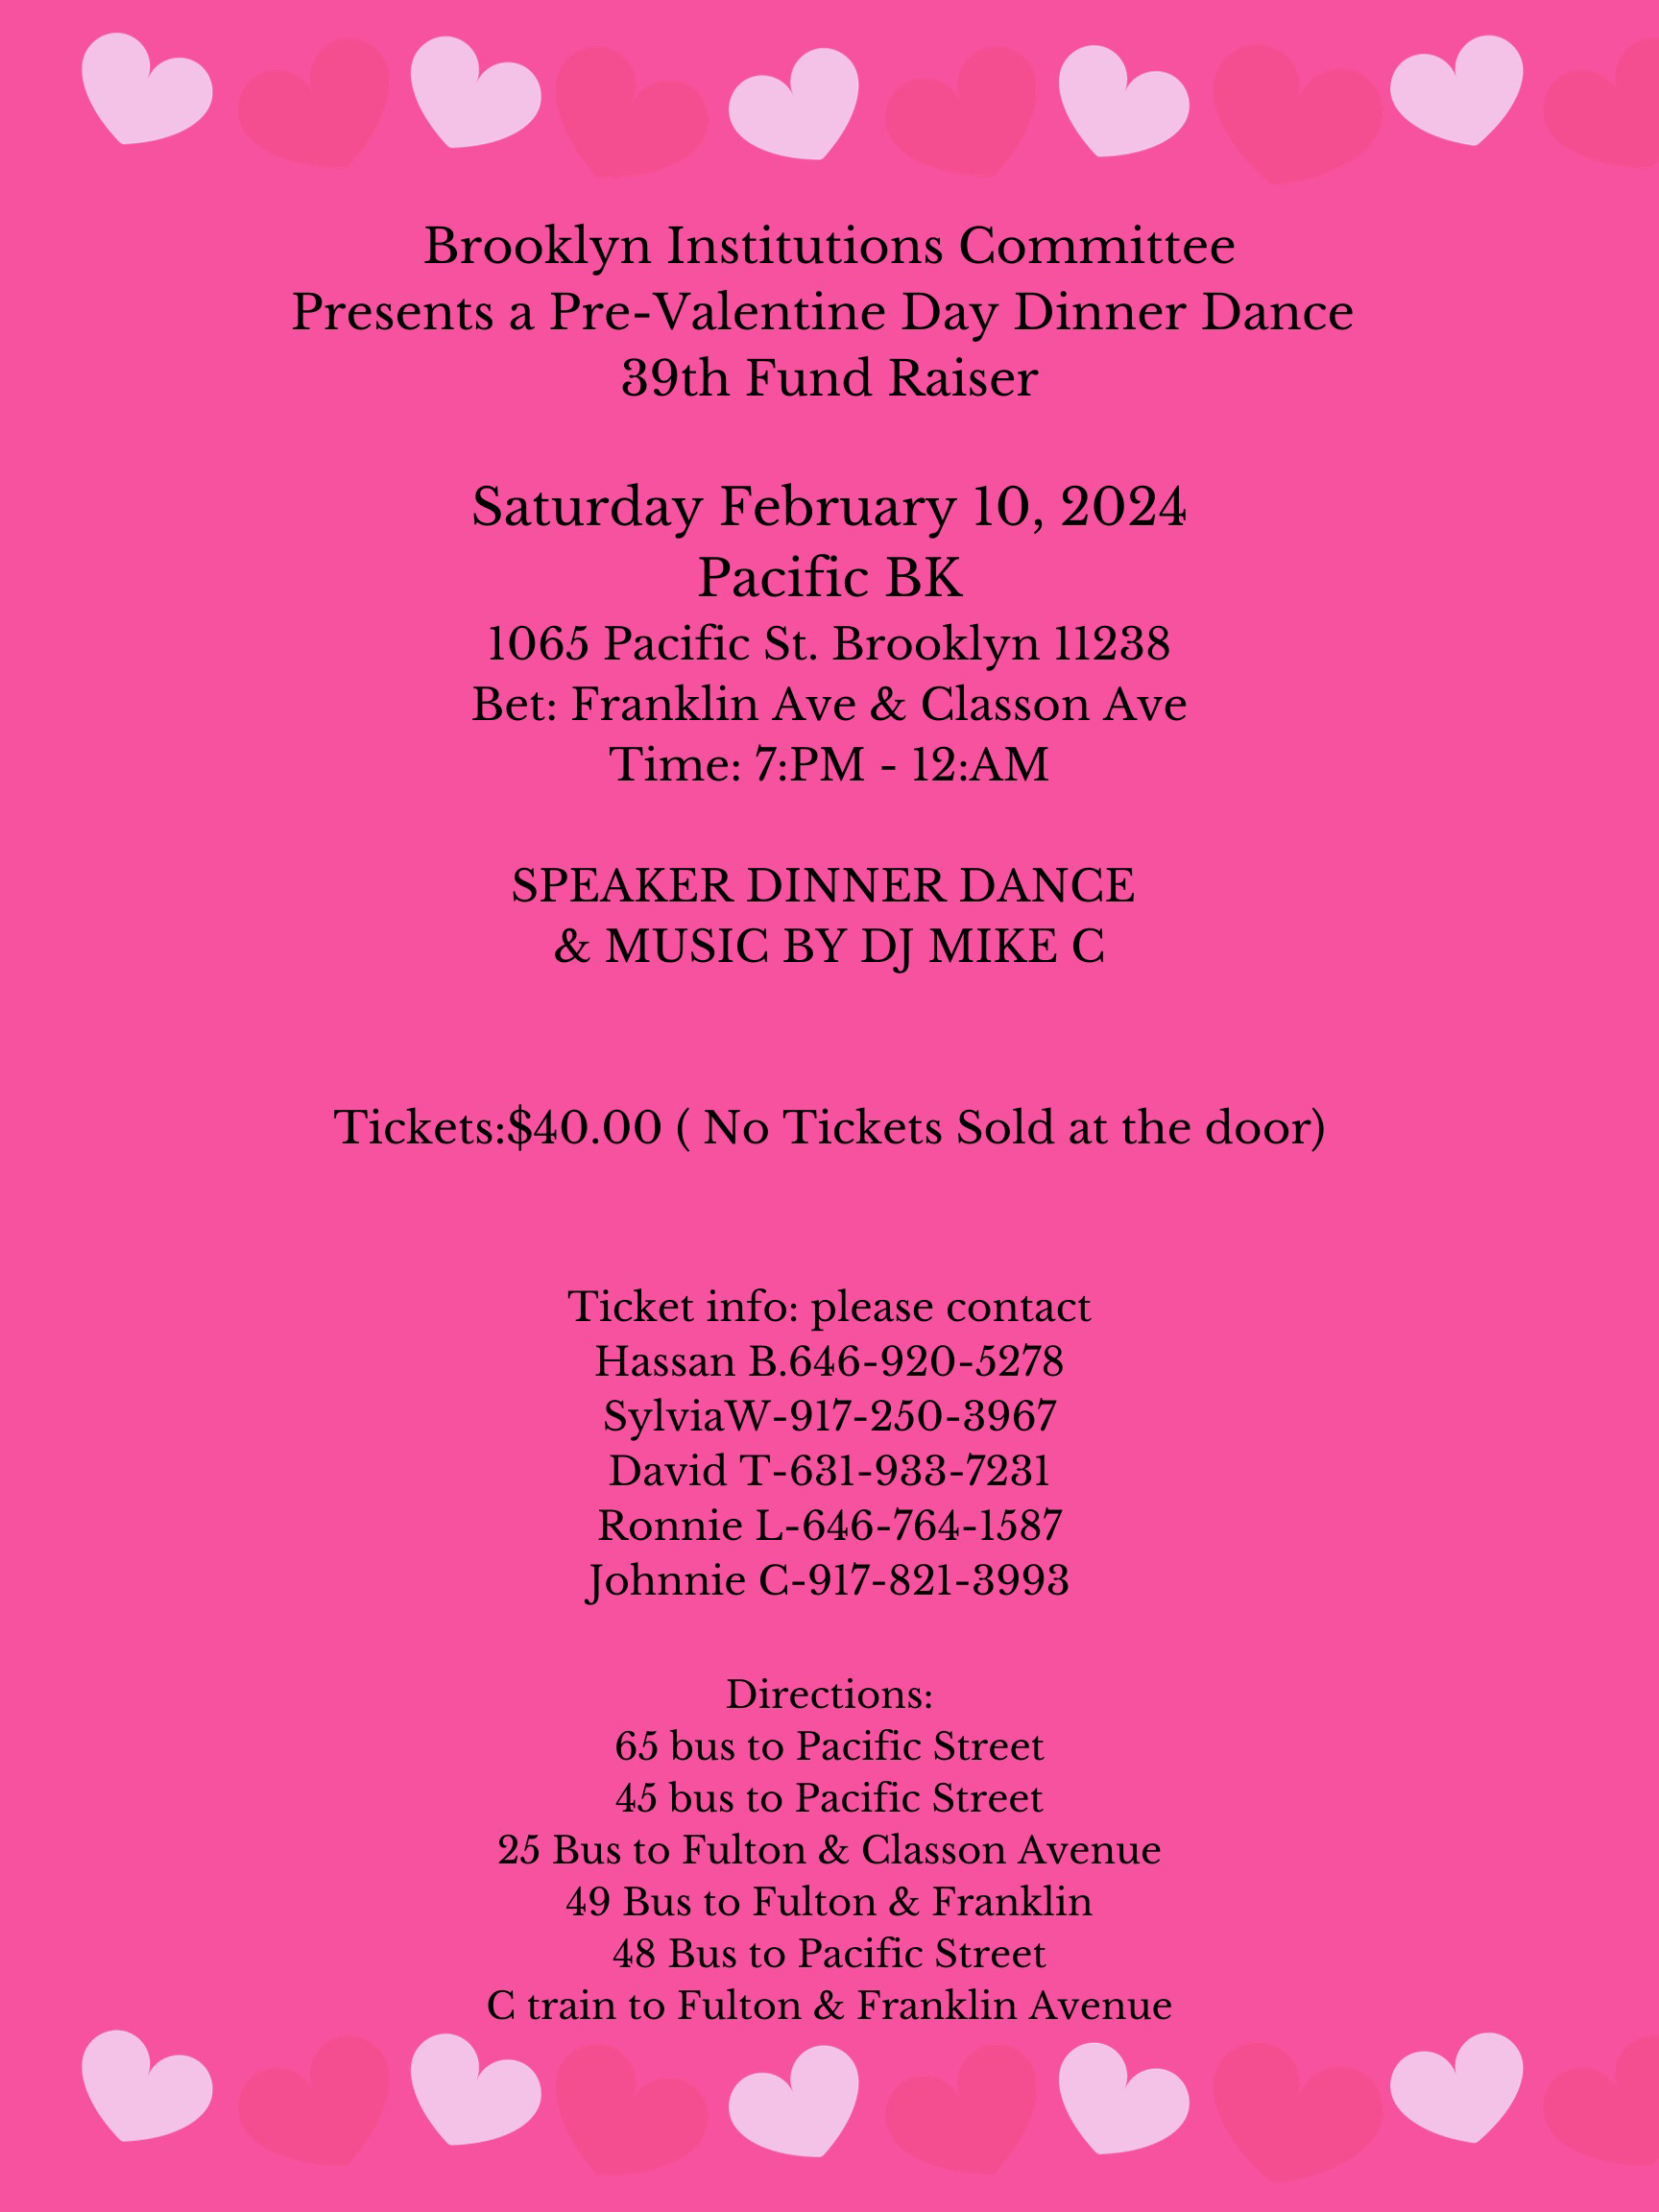 Pre-Valentine's Day Dinner Dance @ Pacific BK